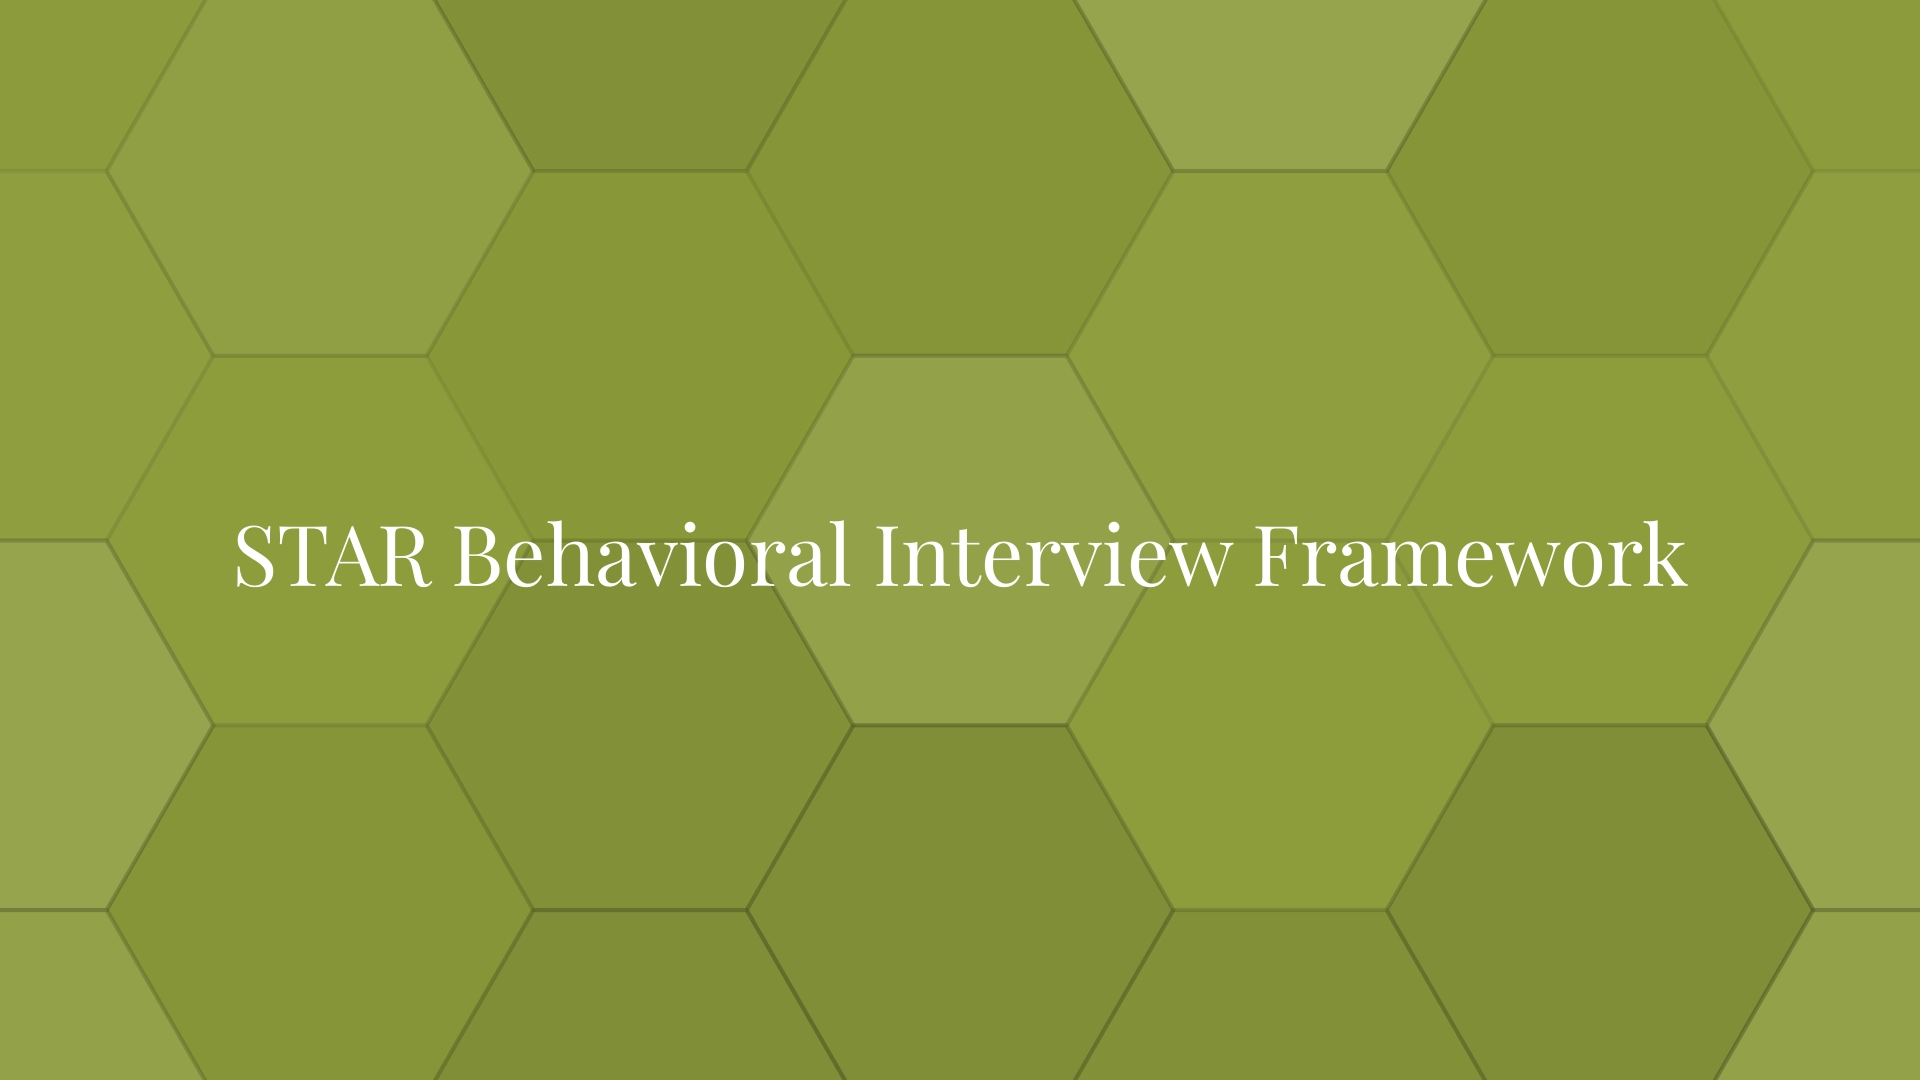 STAR Behavioral Interview Framework